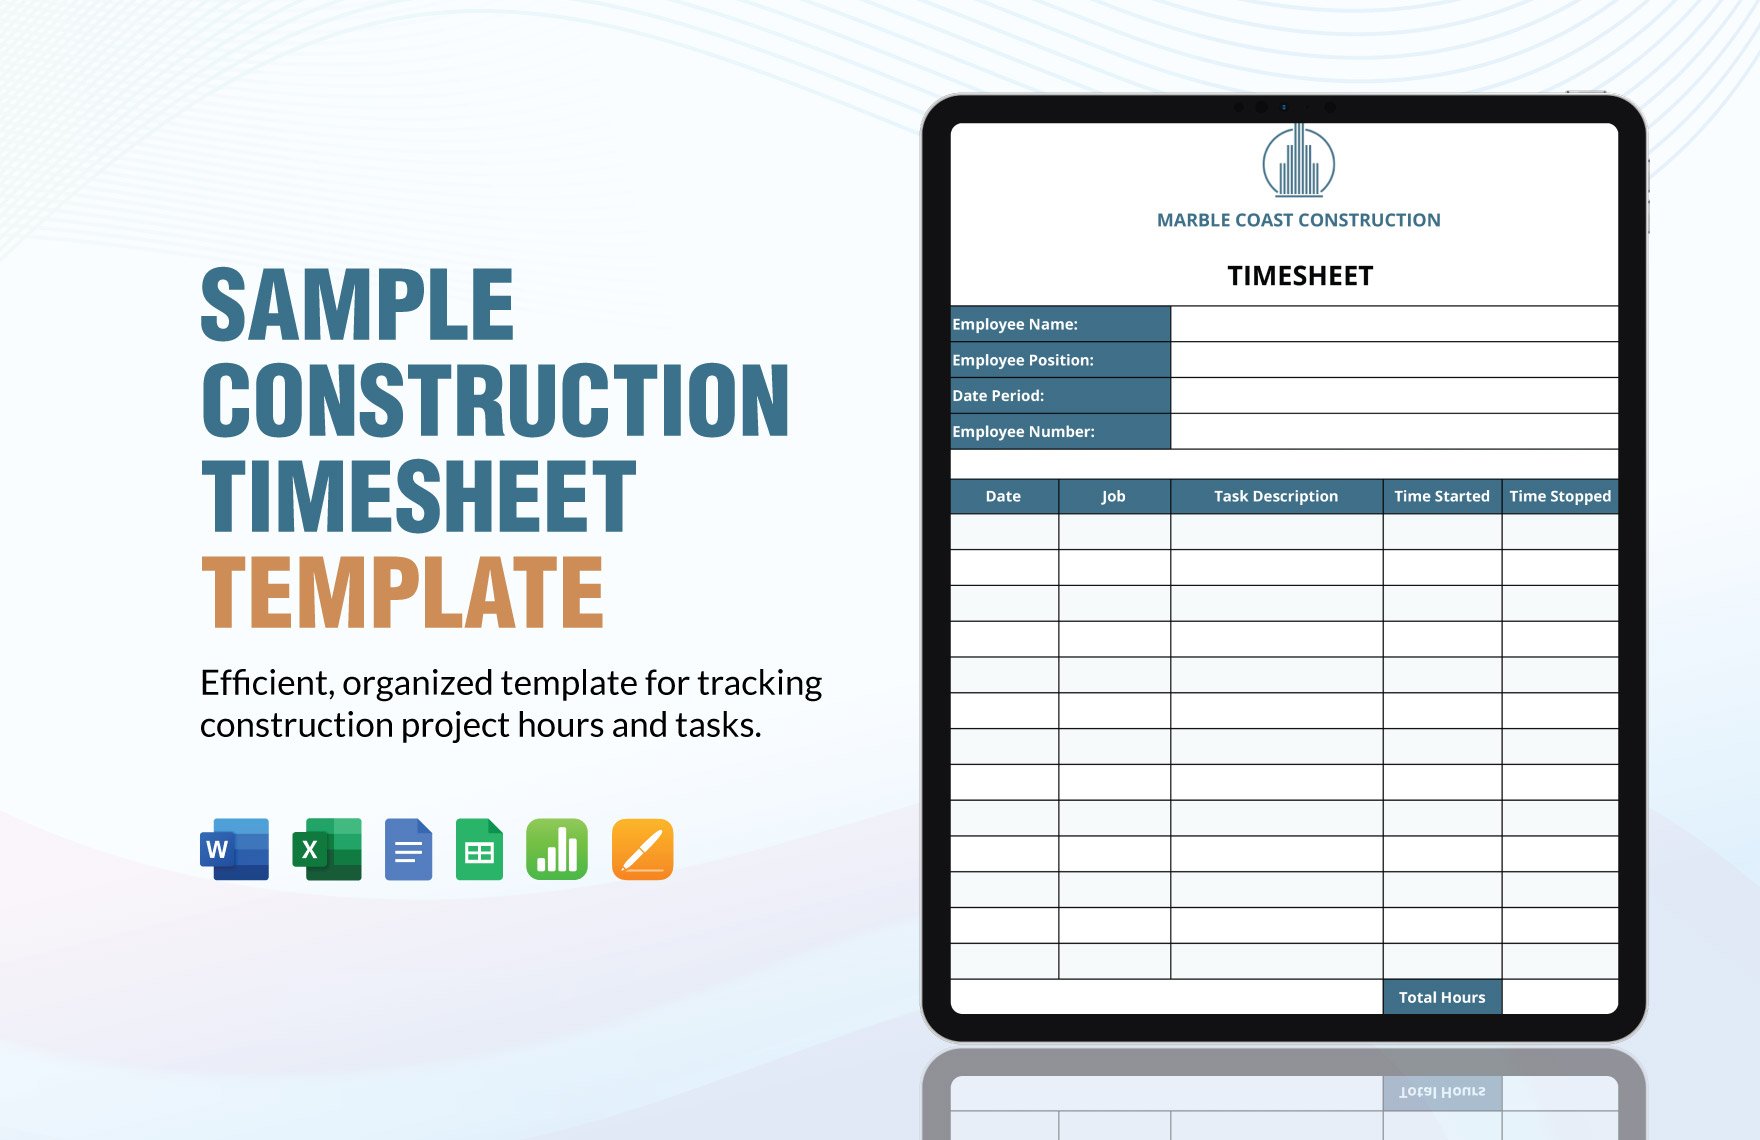 Sample Construction Timesheet Template